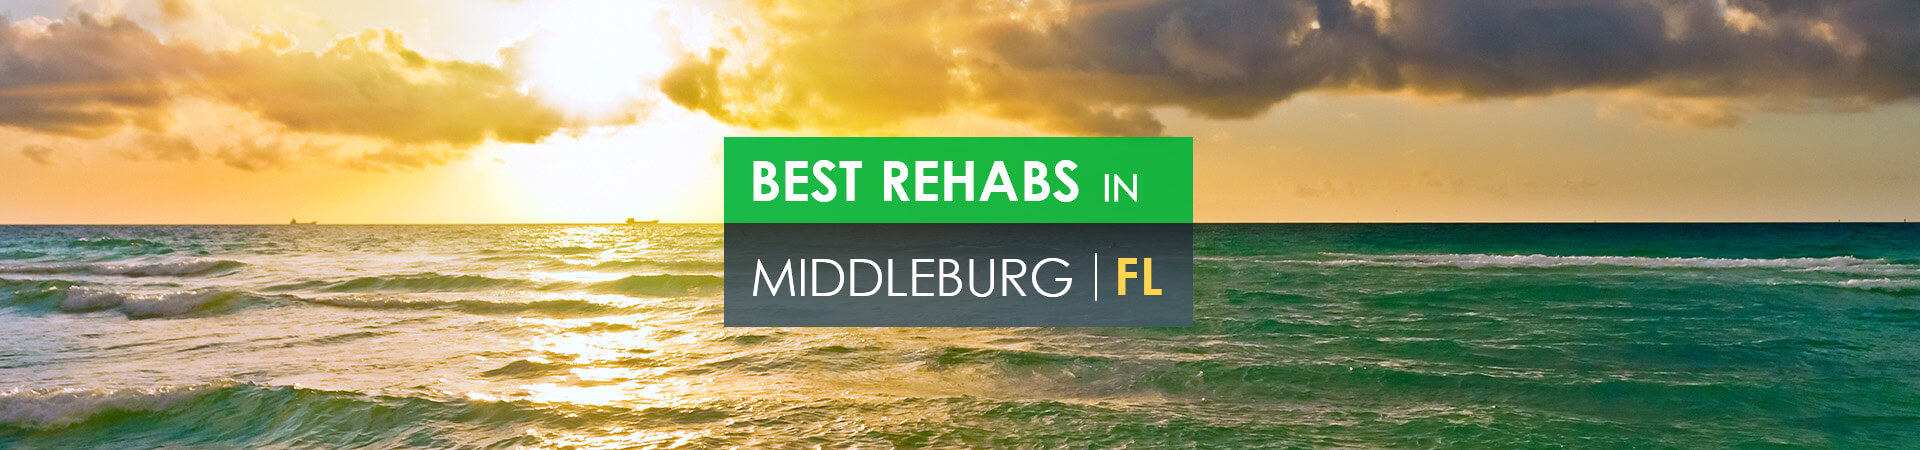 Best rehabs in Middleburg, FL